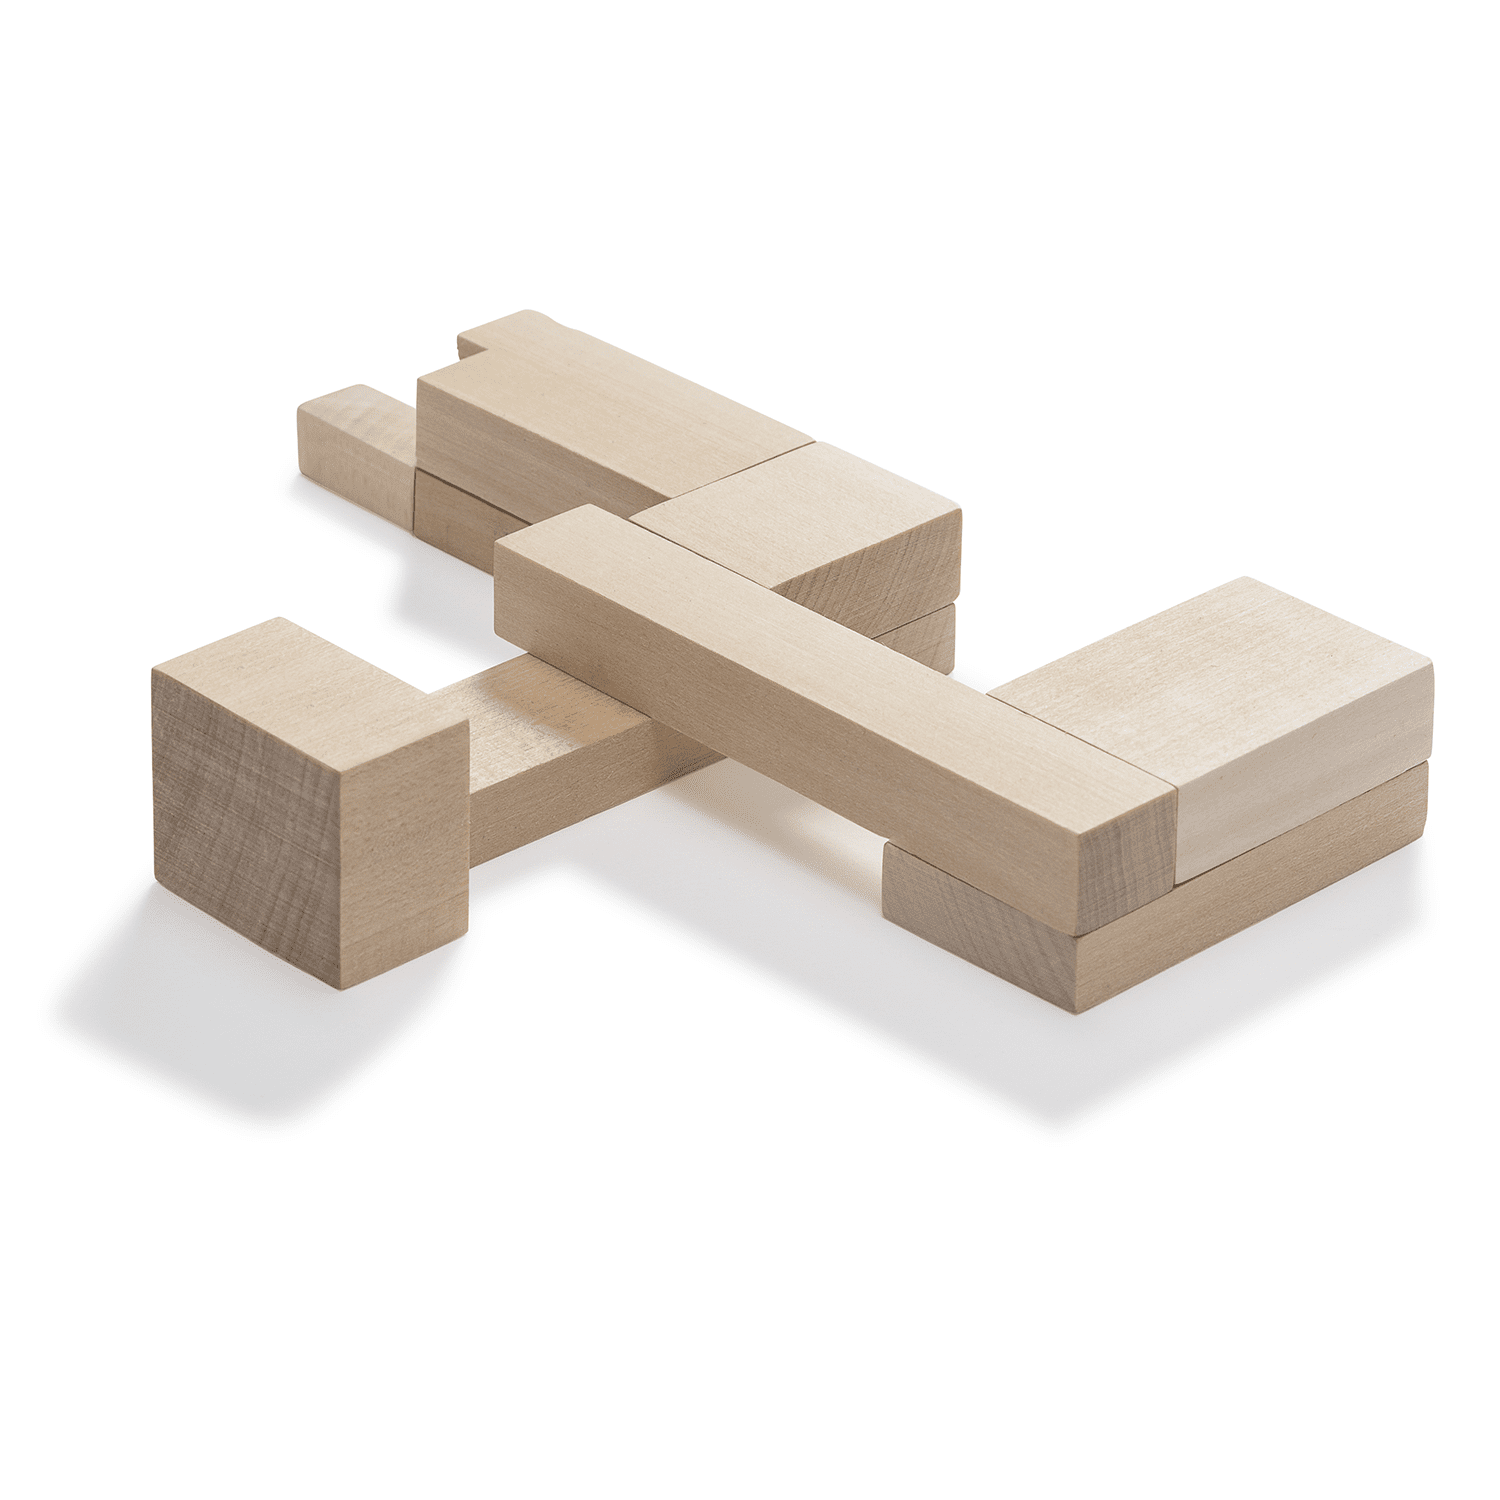 Bauhaus Dessau Building Puzzleの画像